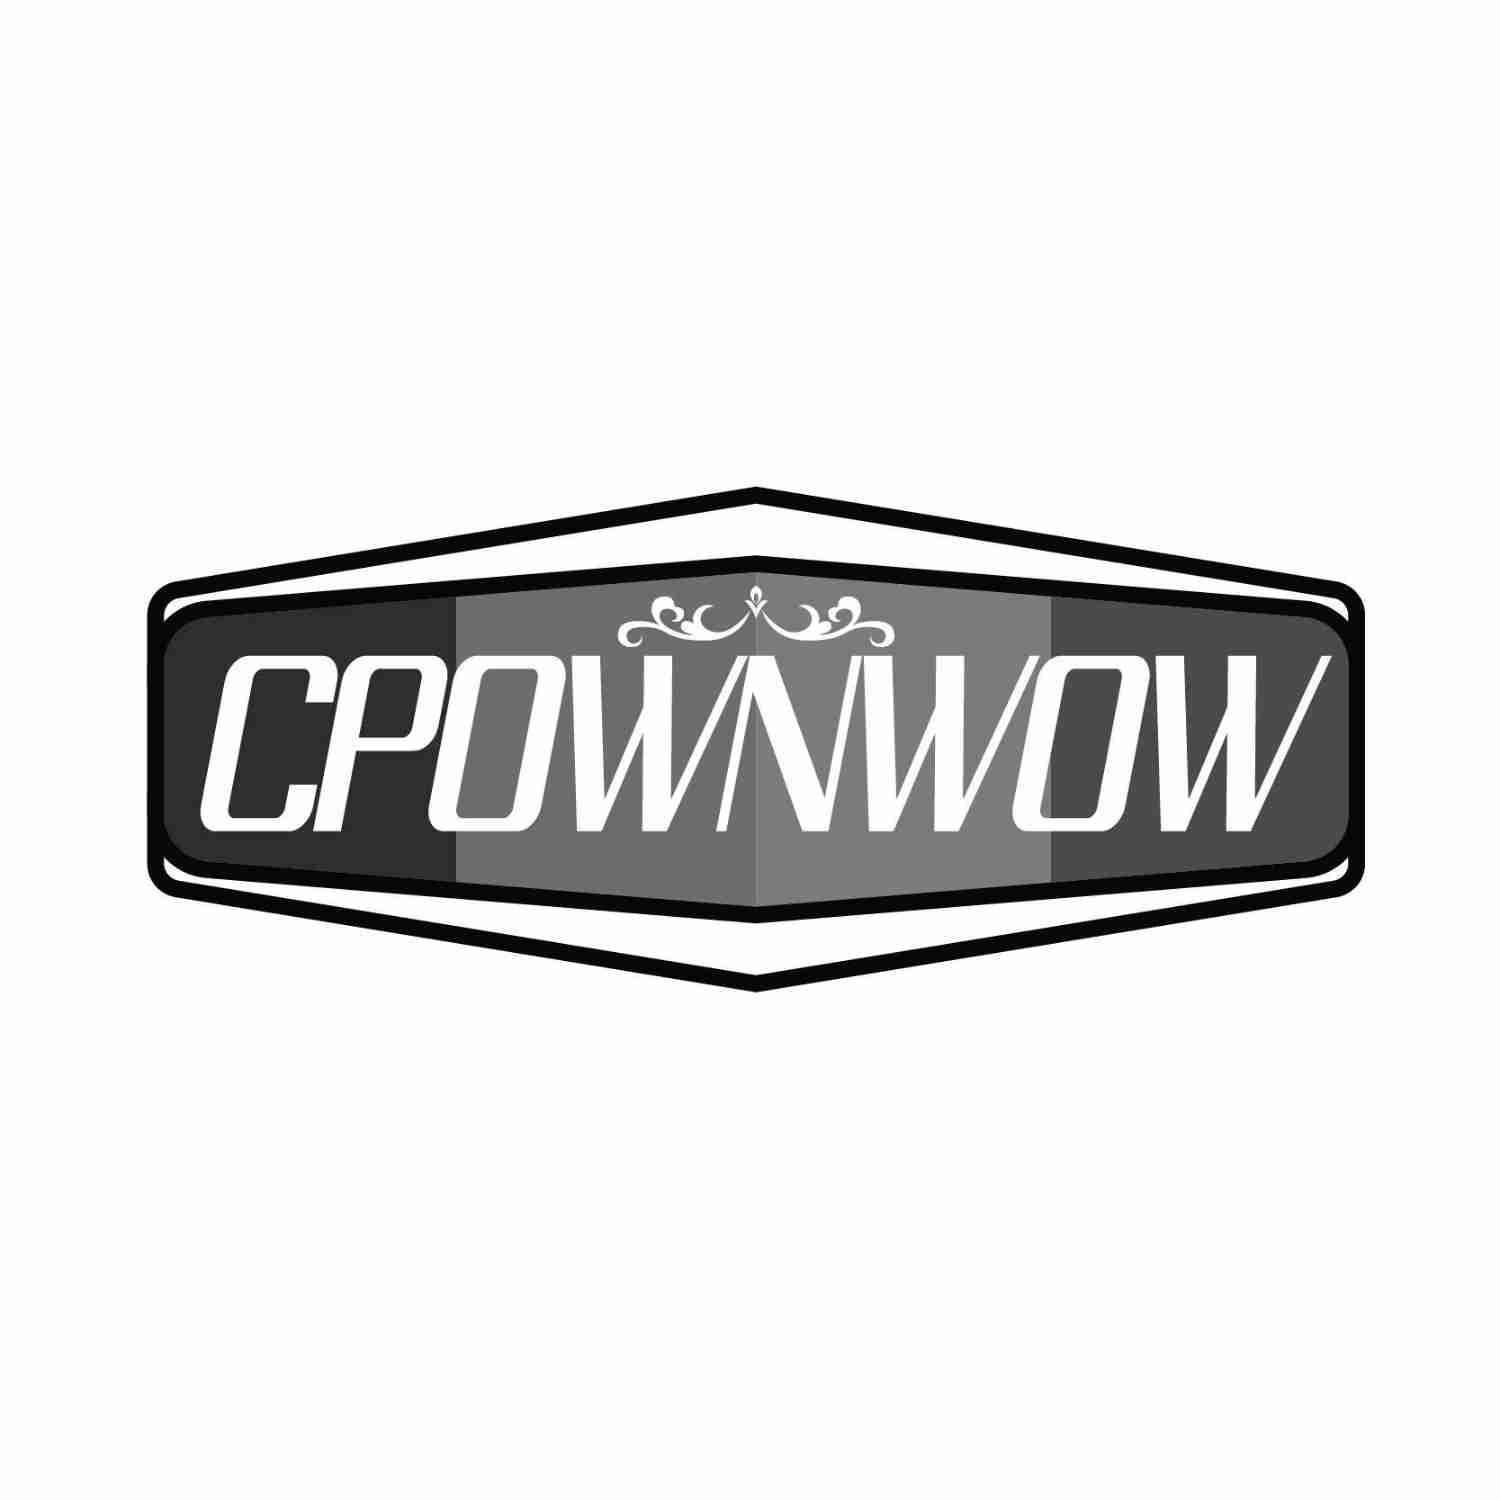 CPOWNWOW 商标公告